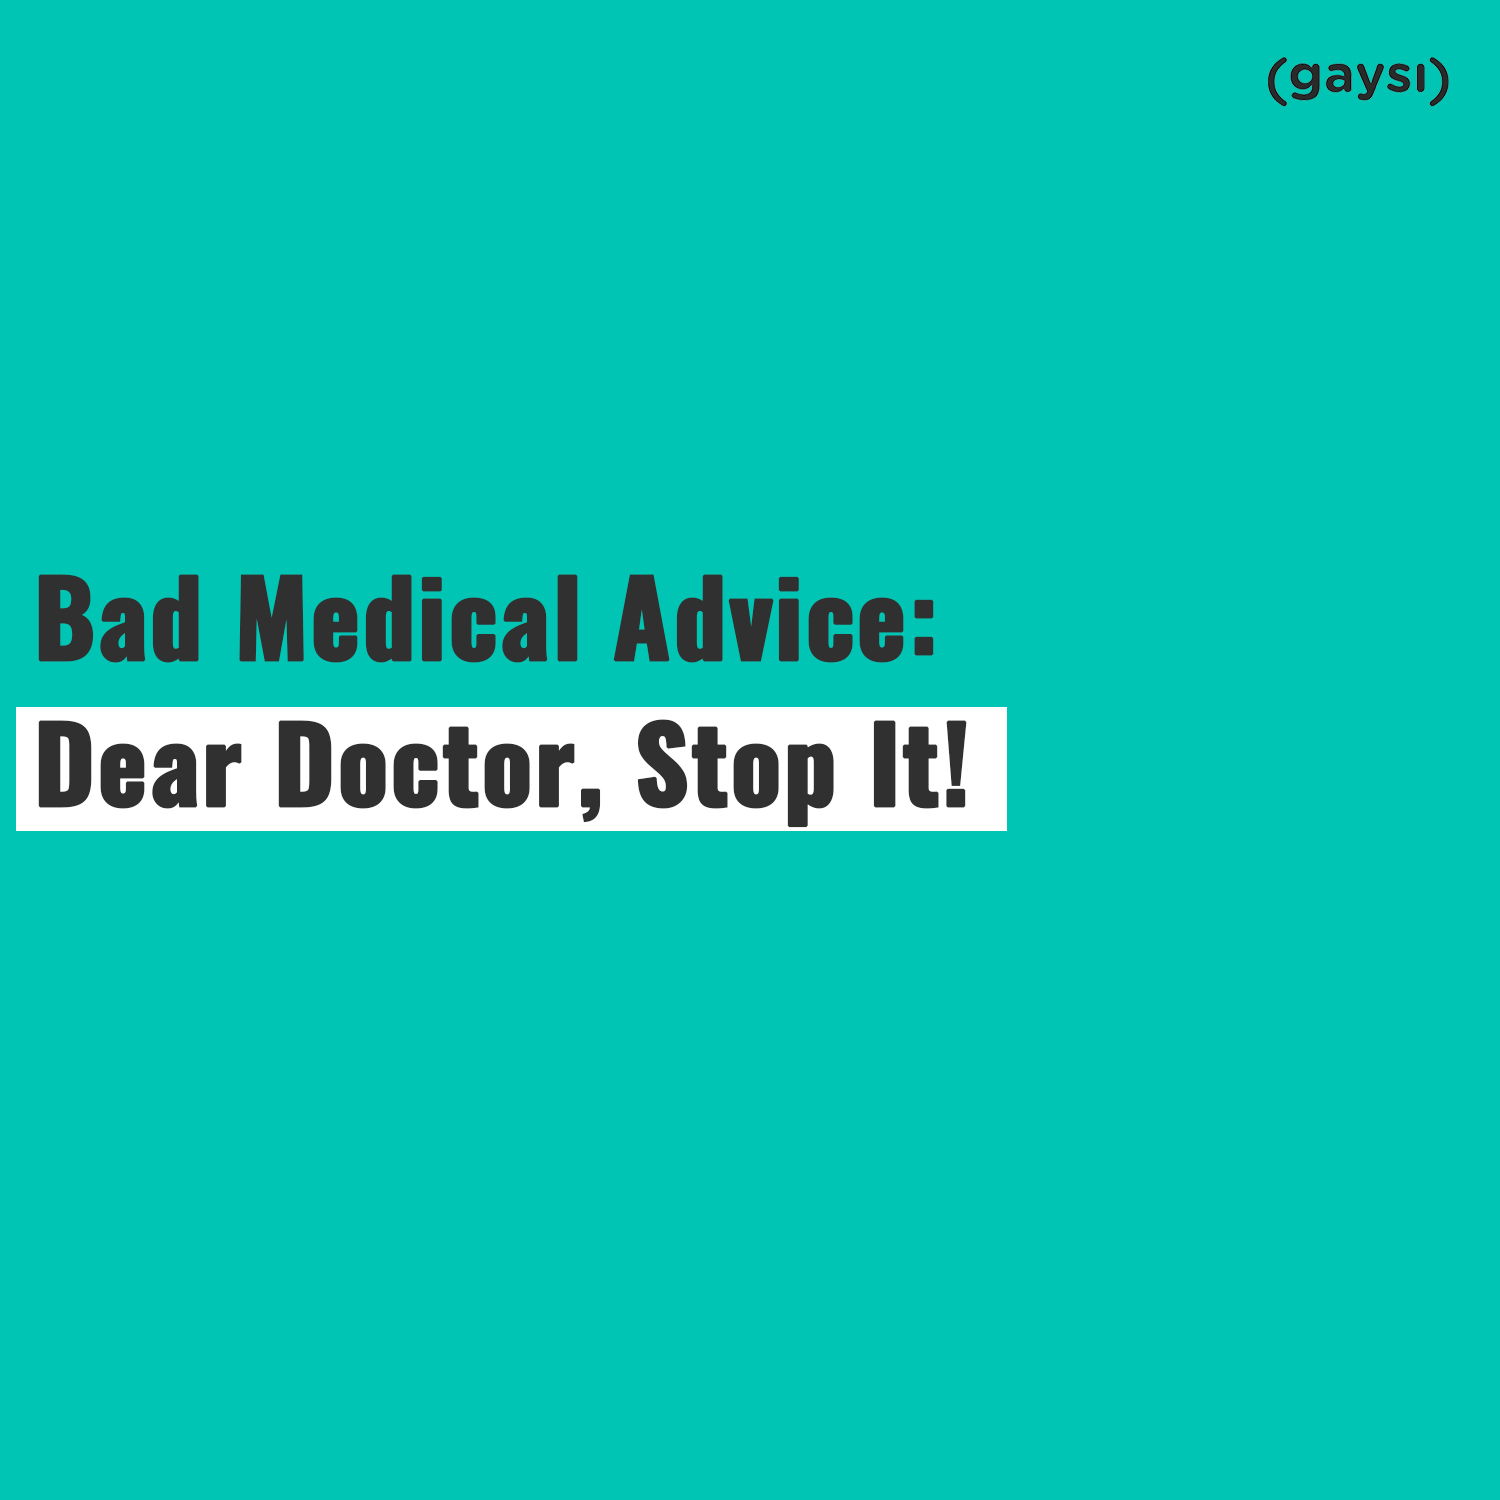 Bad Medical Advice: Dear Doctor, Stop It!